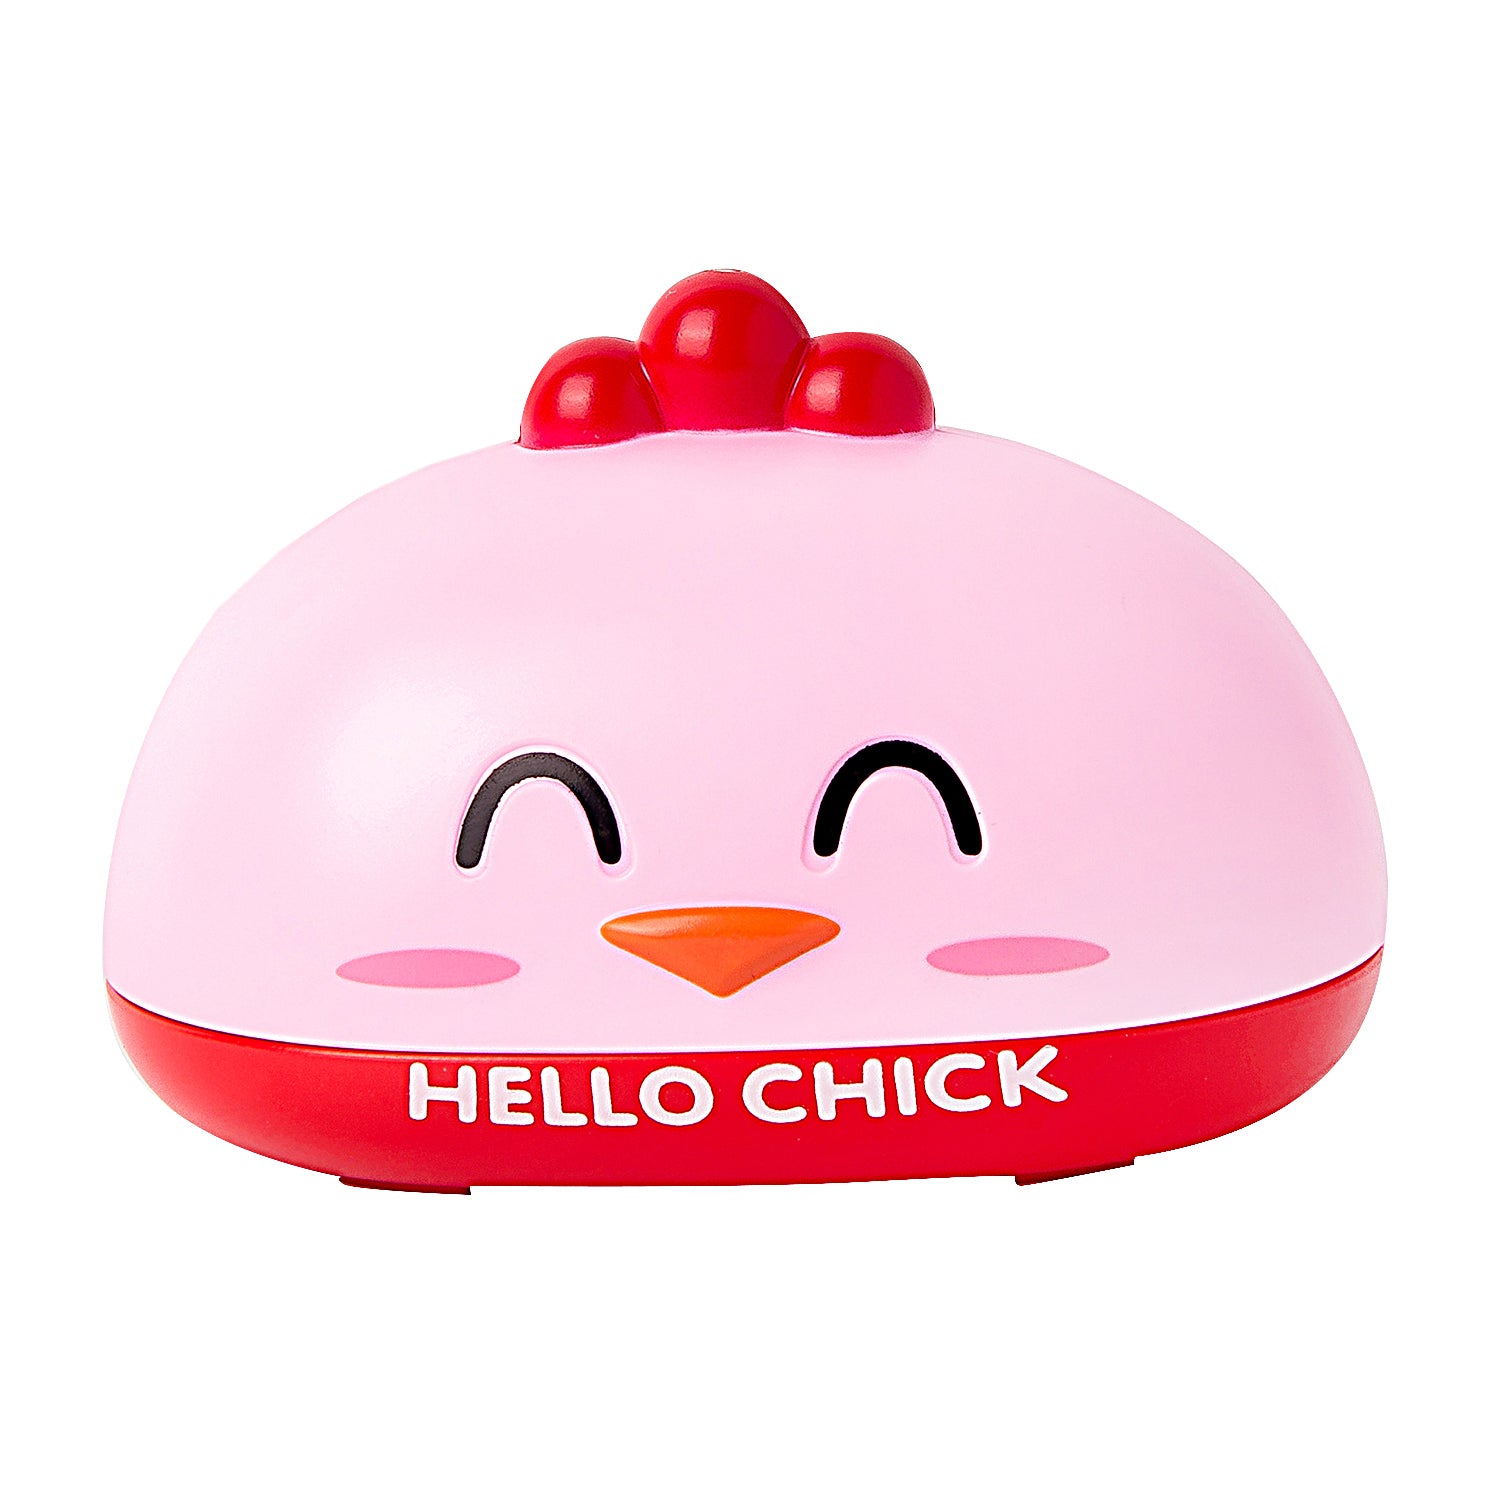 Chick Pink Soap Box - Baby Moo